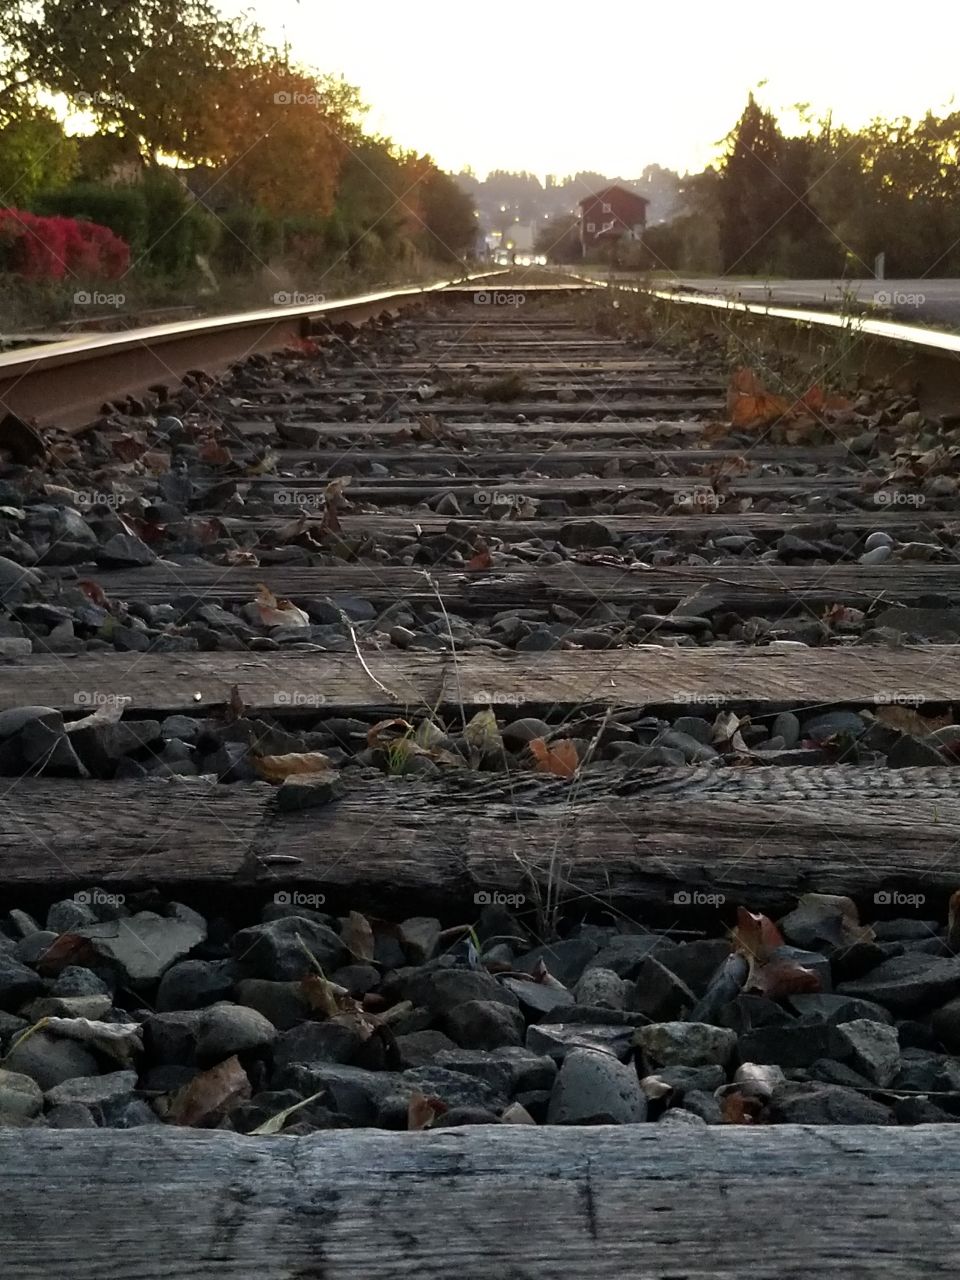 Railroad 17'